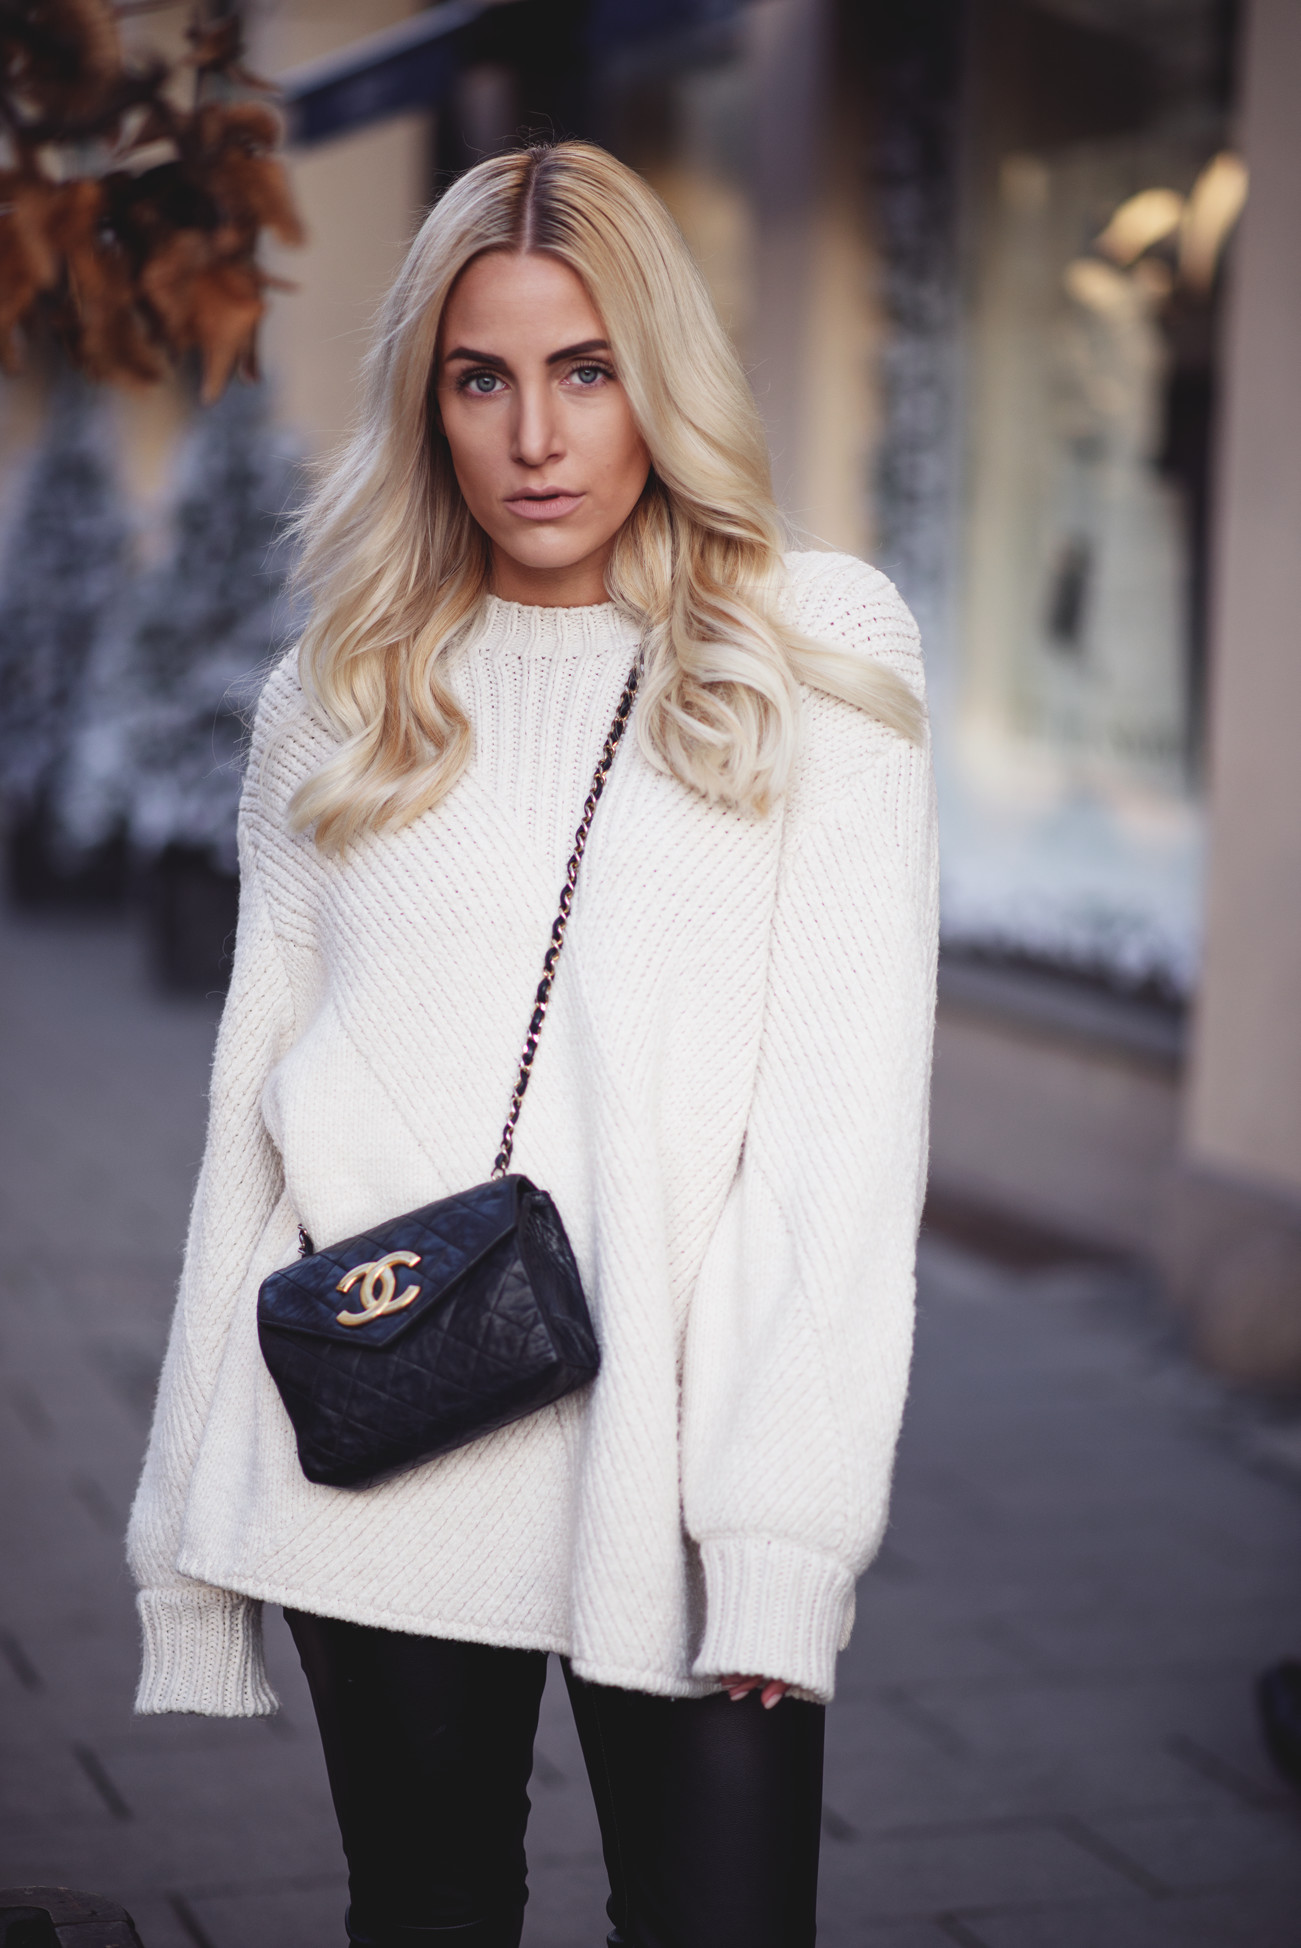 fashion-fashionblogger-blogger-chanel-winter-cozy-knitwear-leo-sequinsophia1-dsc_6281